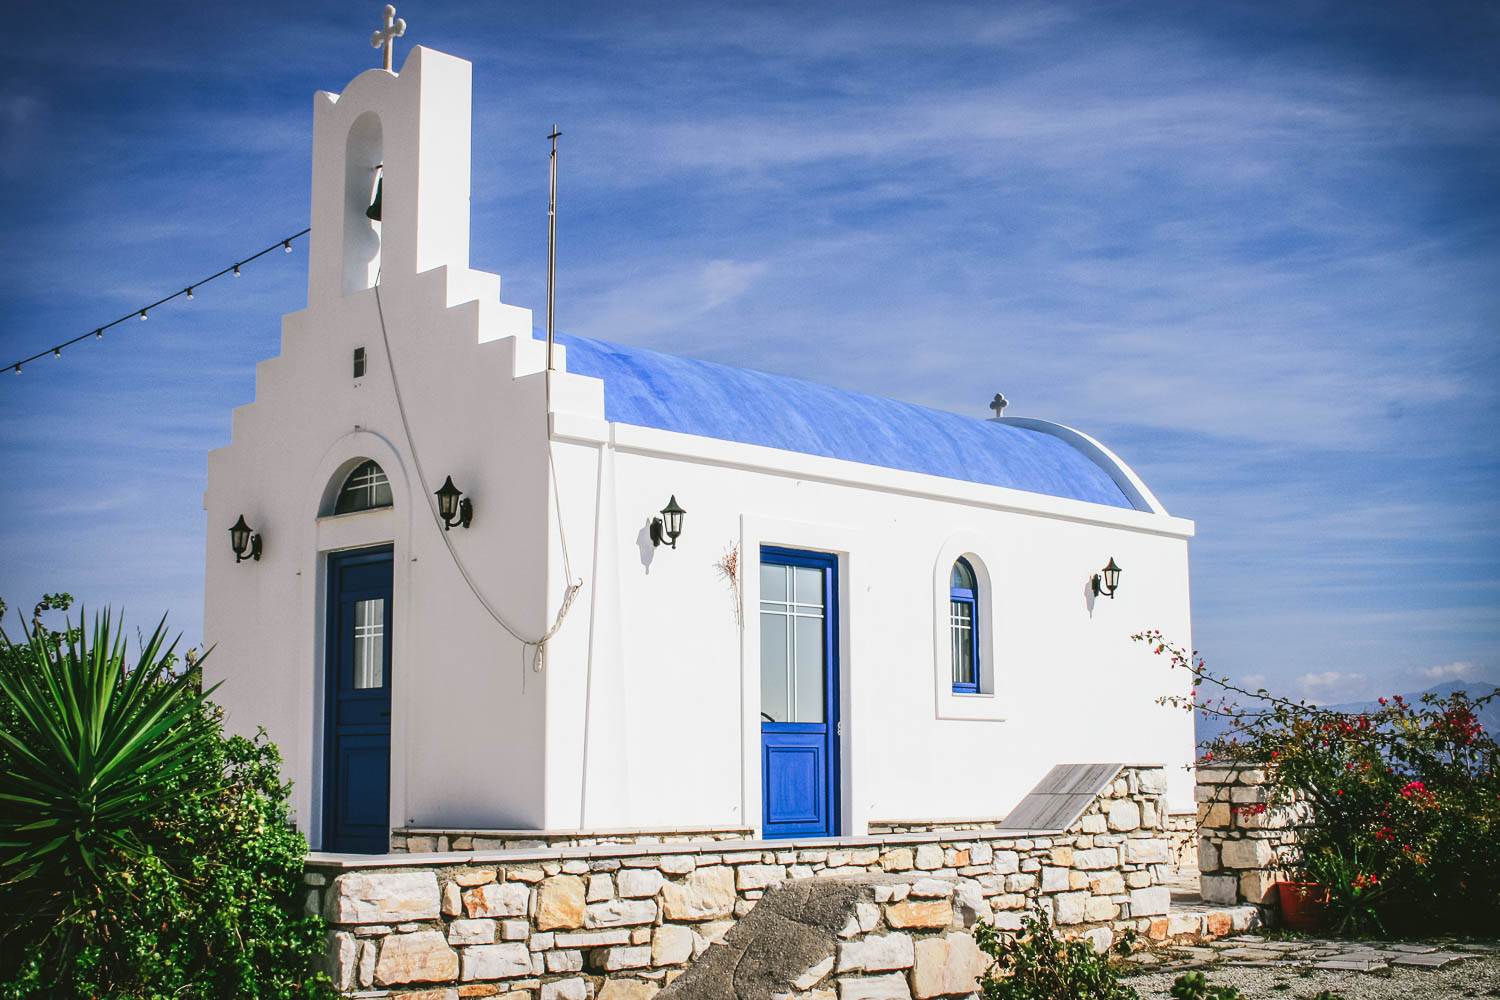 CHURCH ON PAROS ISLAND. BY LEONIE WISE